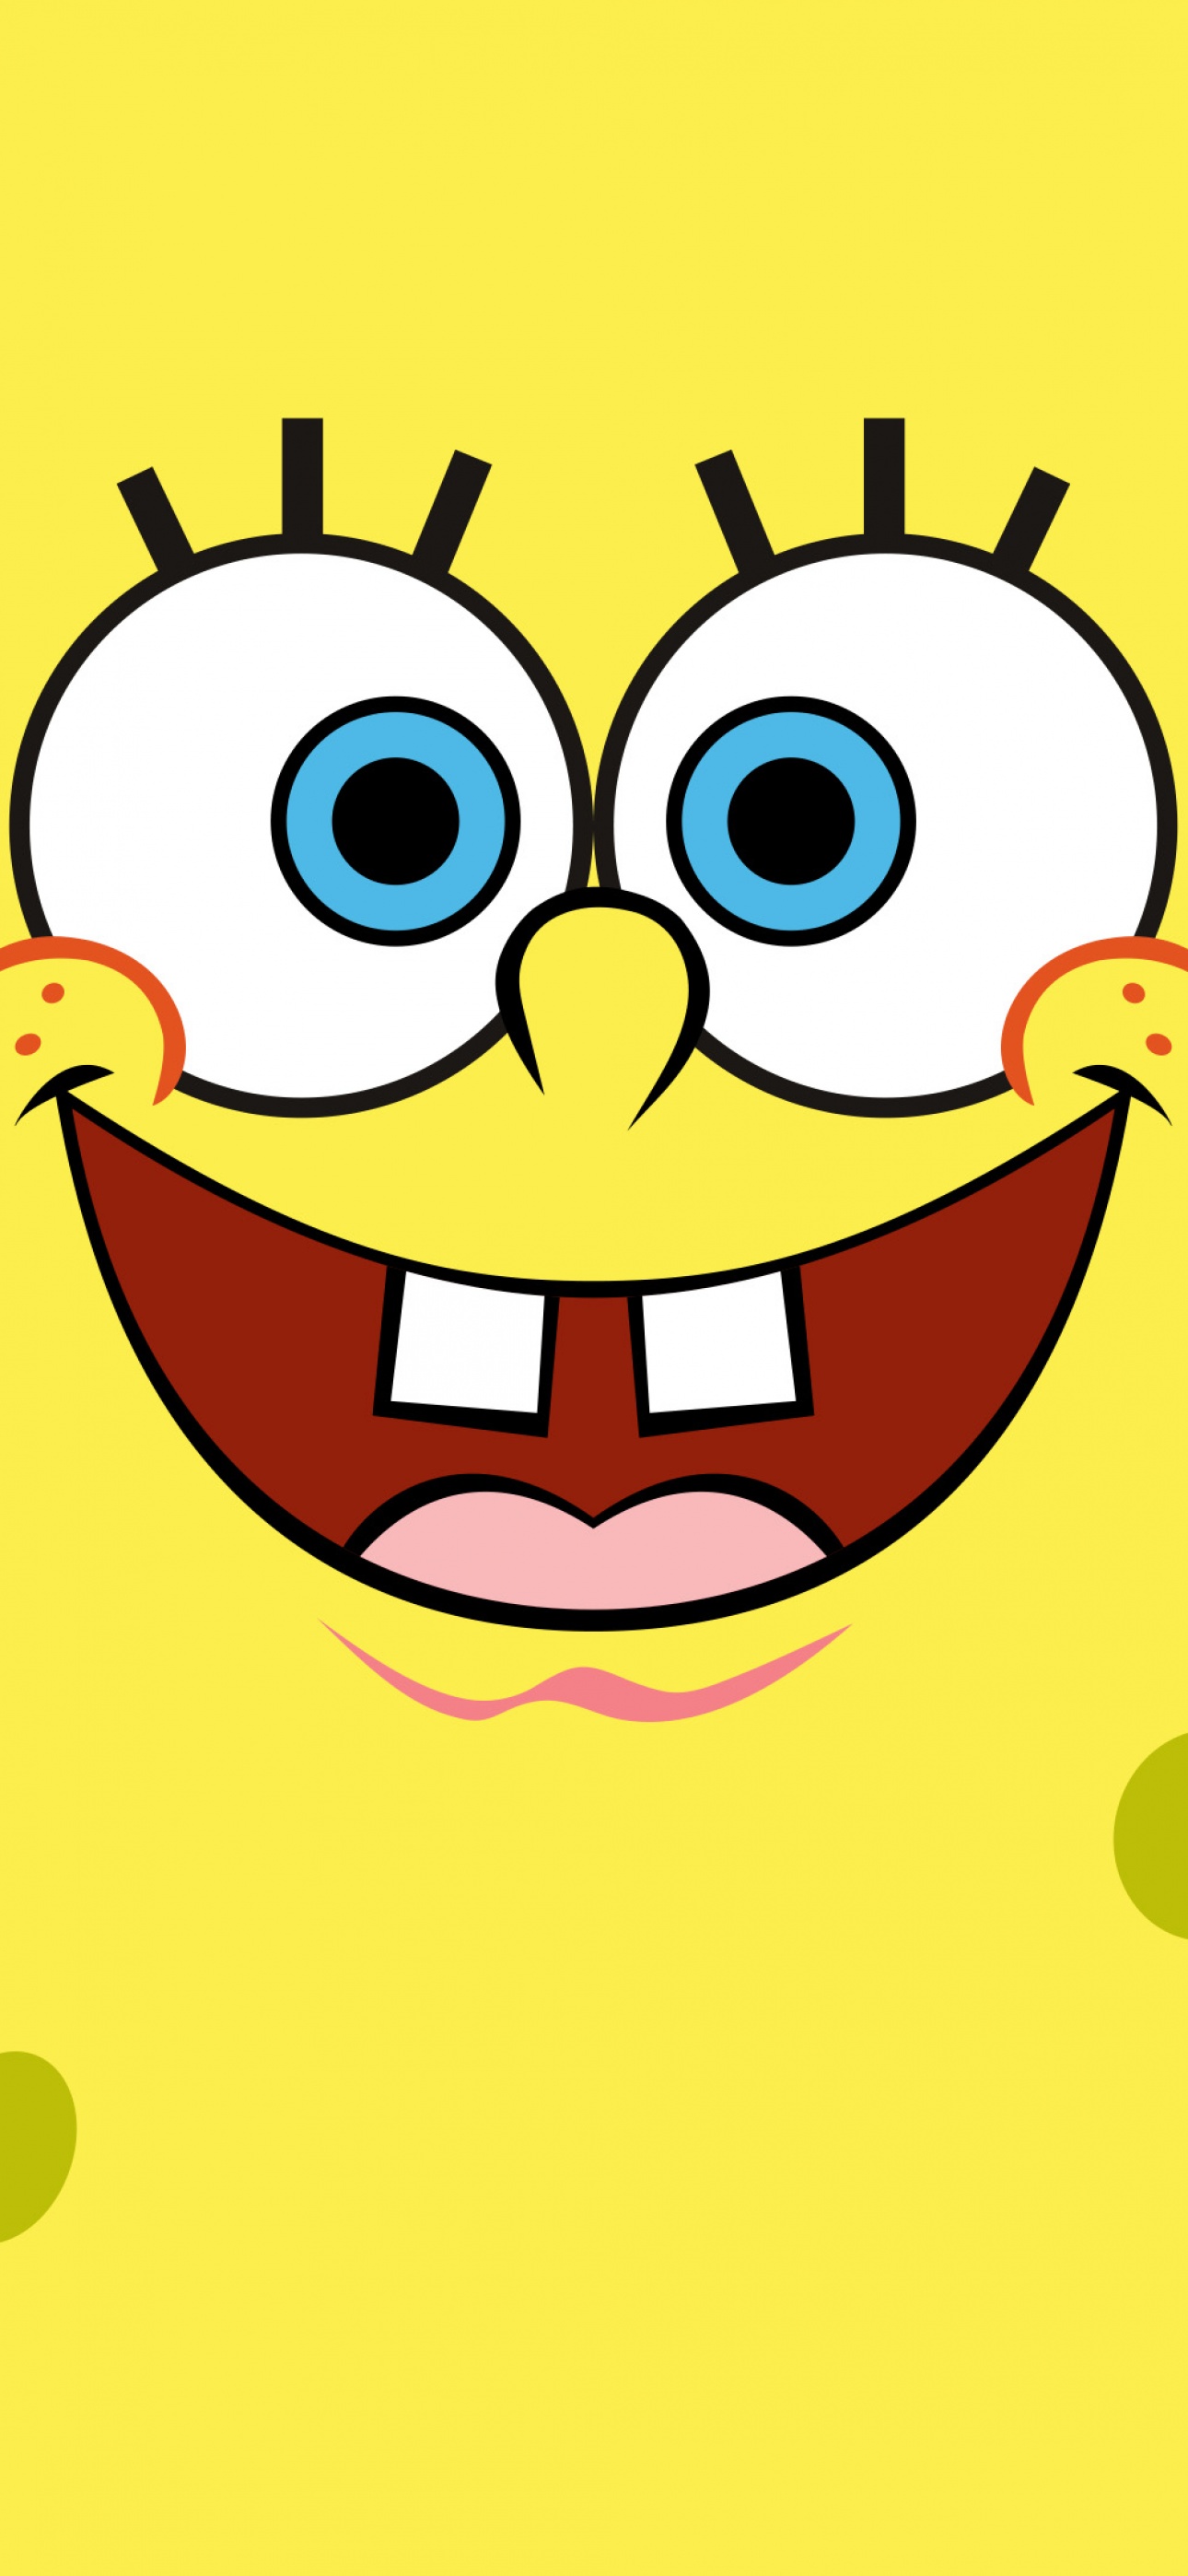 Spongebob squarepants smiling on a yellow background - SpongeBob, smile